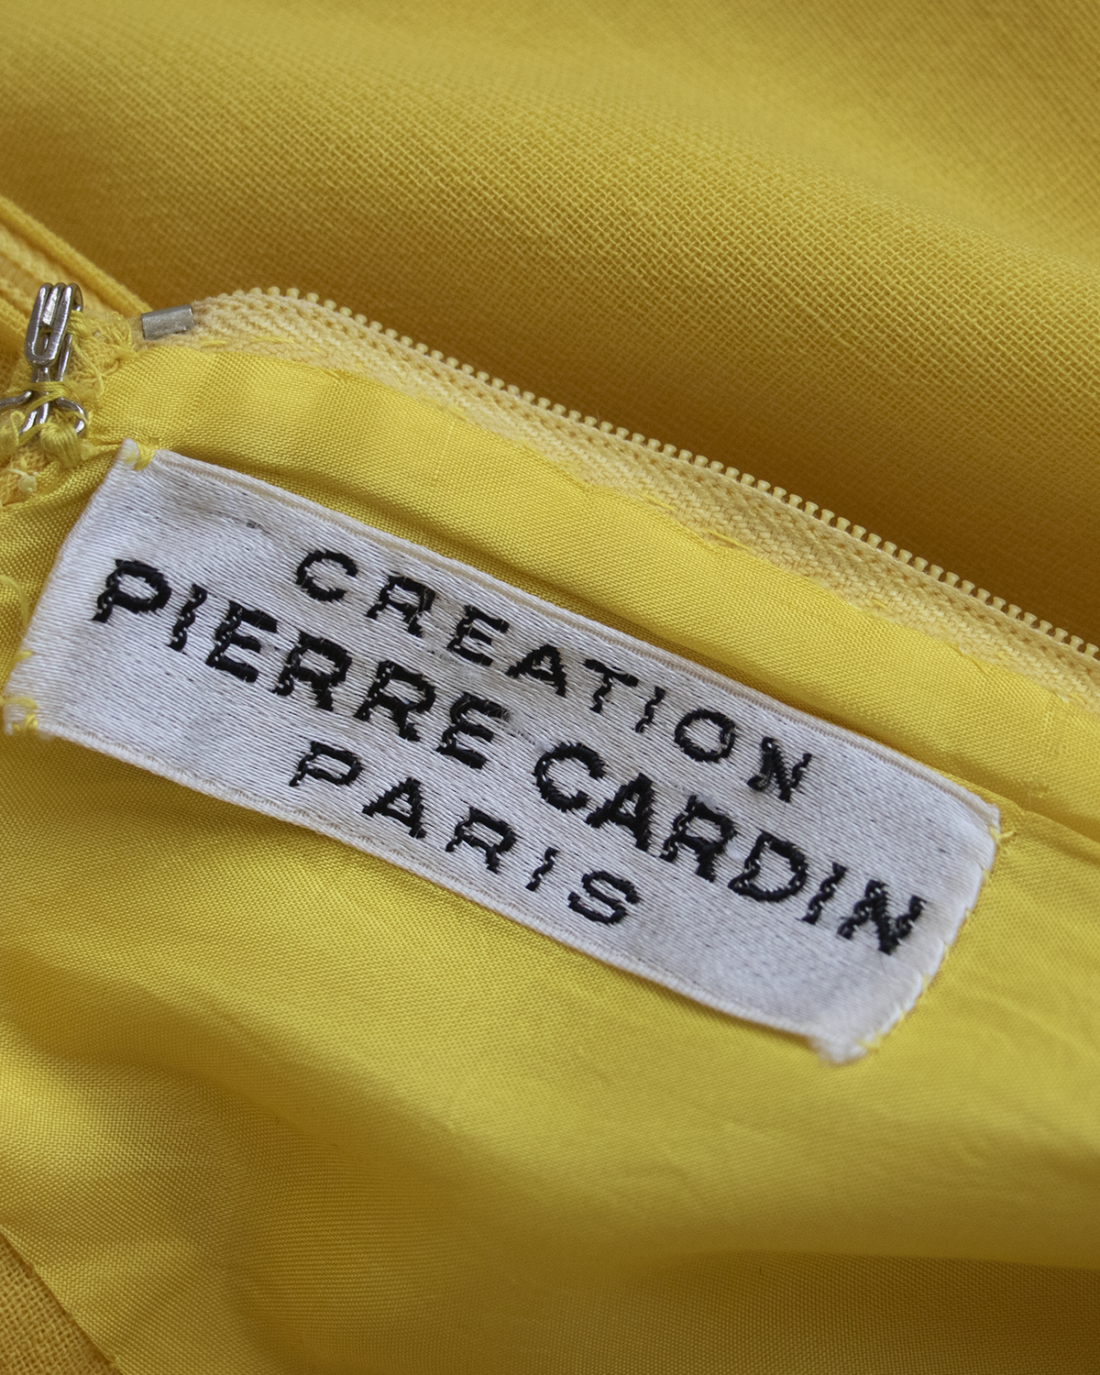 Pierre Cardin Yellow Dress from 1970s